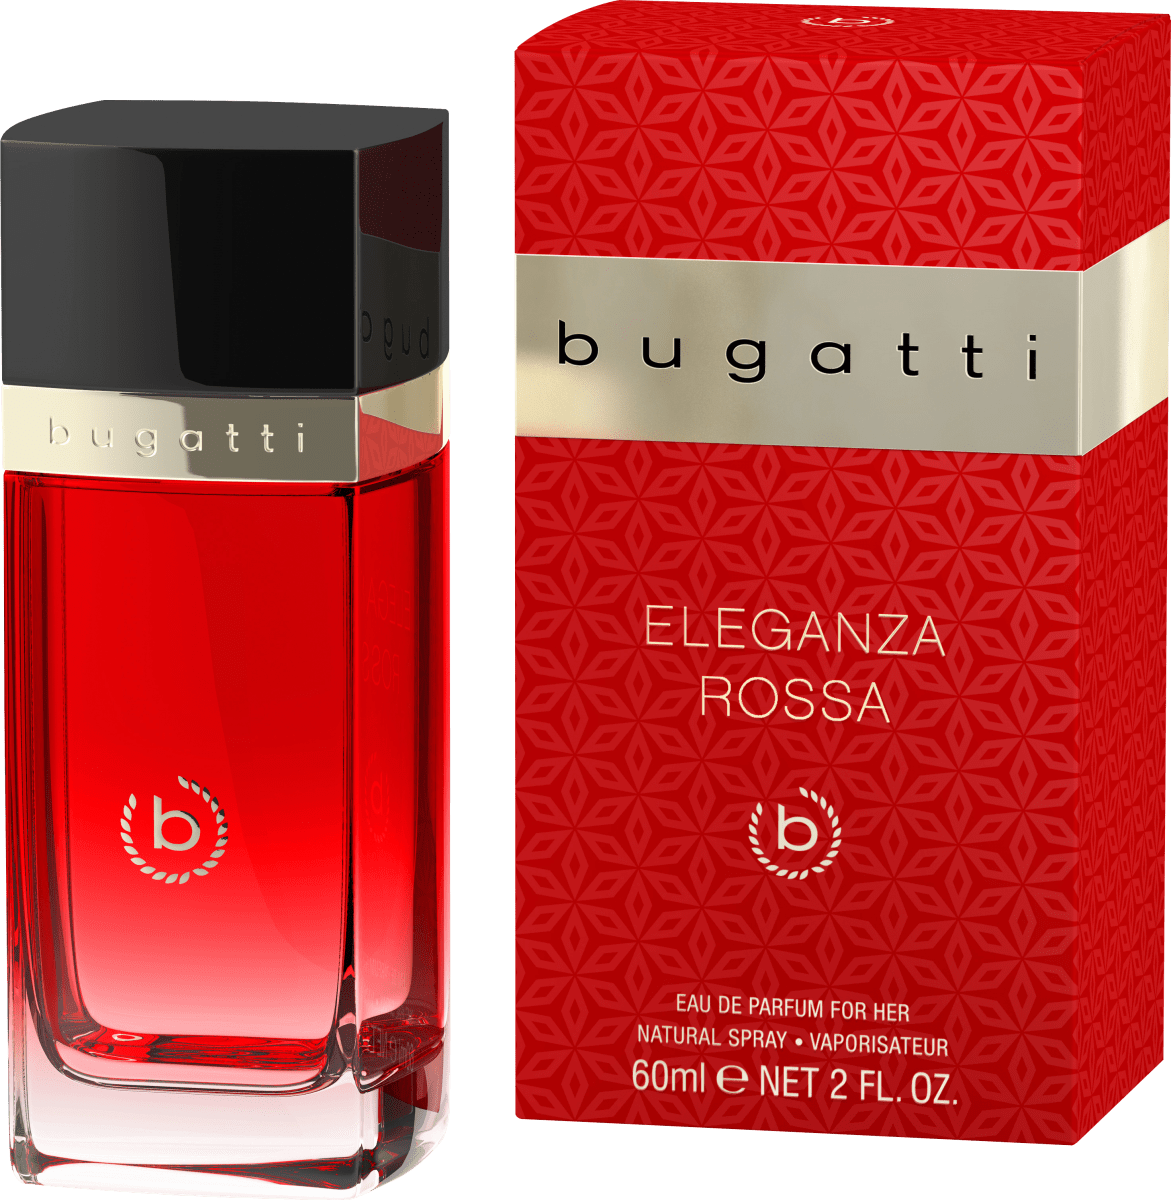 bugatti Eleganza Rossa Eau de Parfum, 60 ml | Eau de Parfum